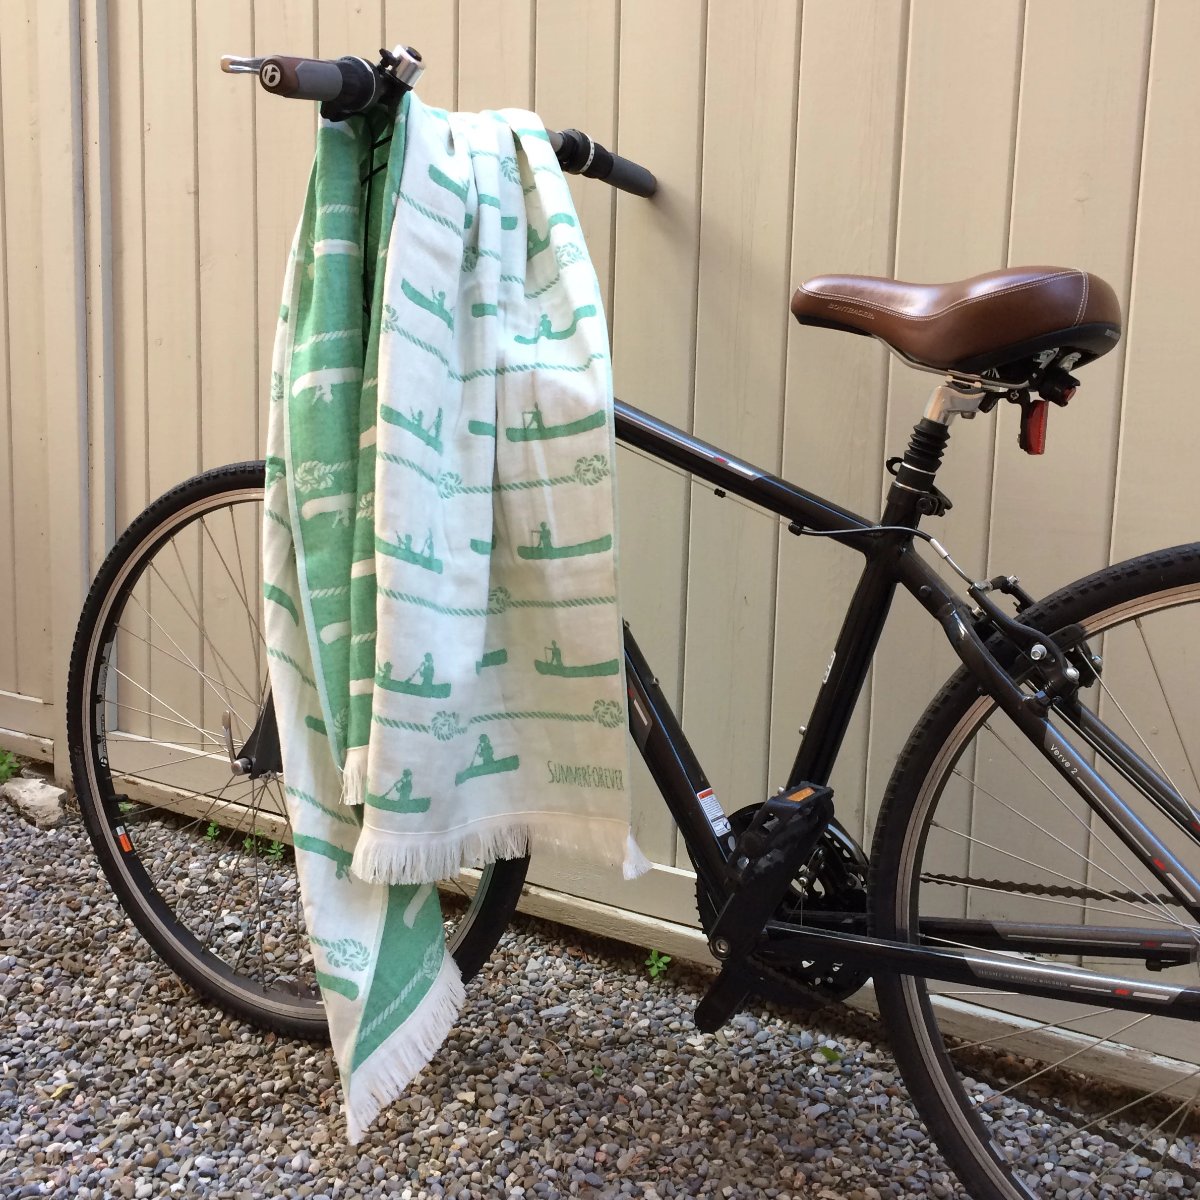 Canoe Design Turkish Towel, Green, use in Hiking, Camping, Canoeing, Toronto Canada 